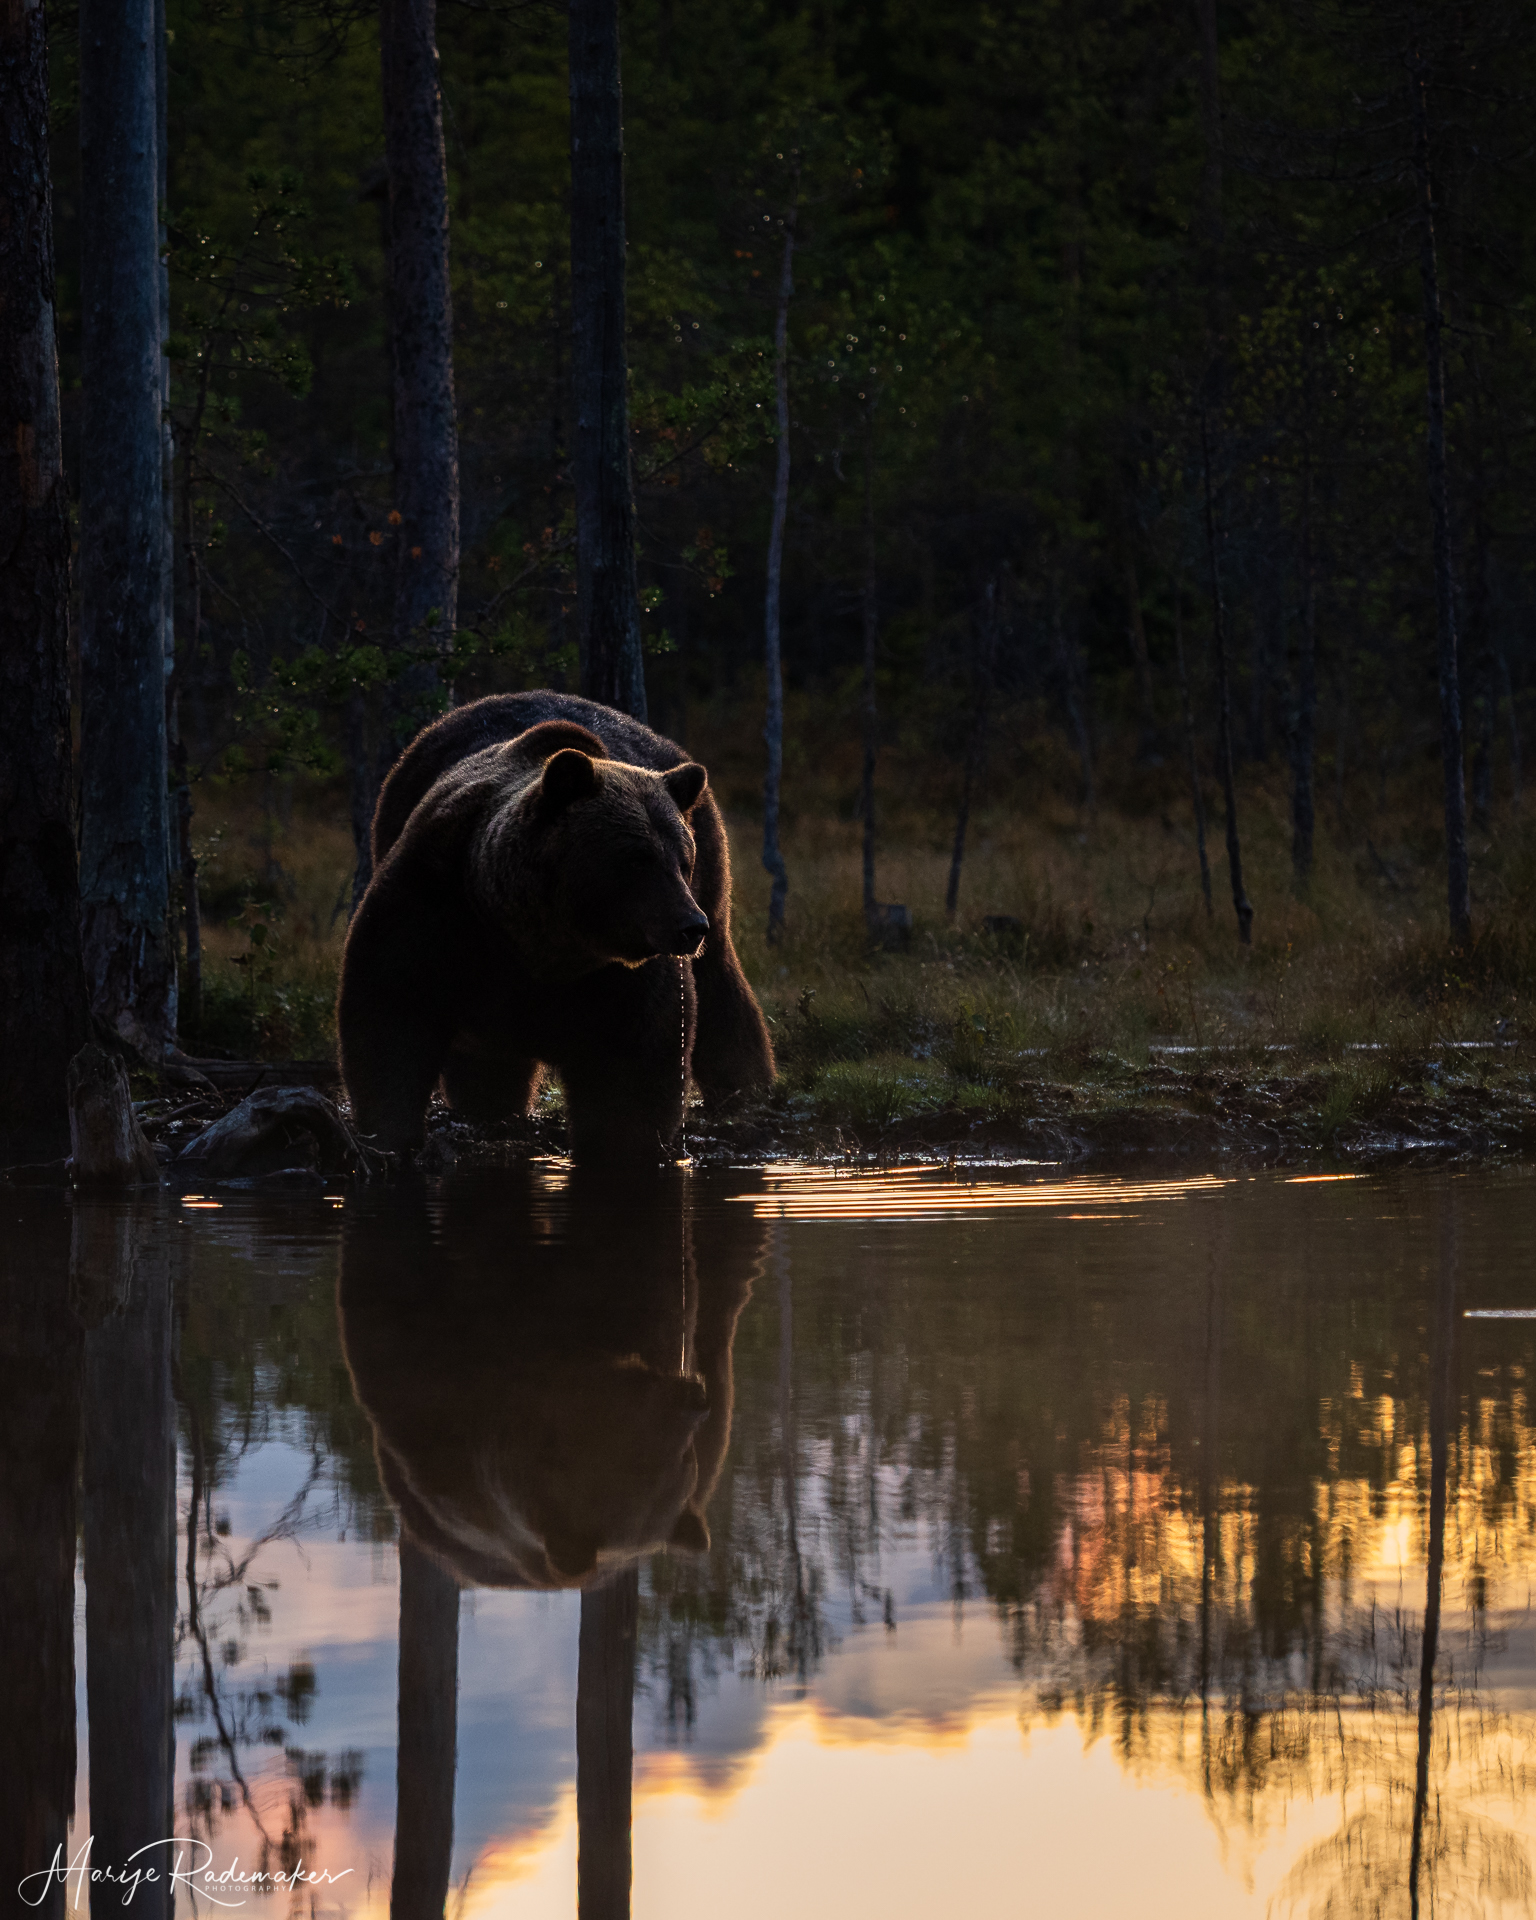 Captured at Wildlife Finland on 19 Sep, 2019 by Marije Rademaker